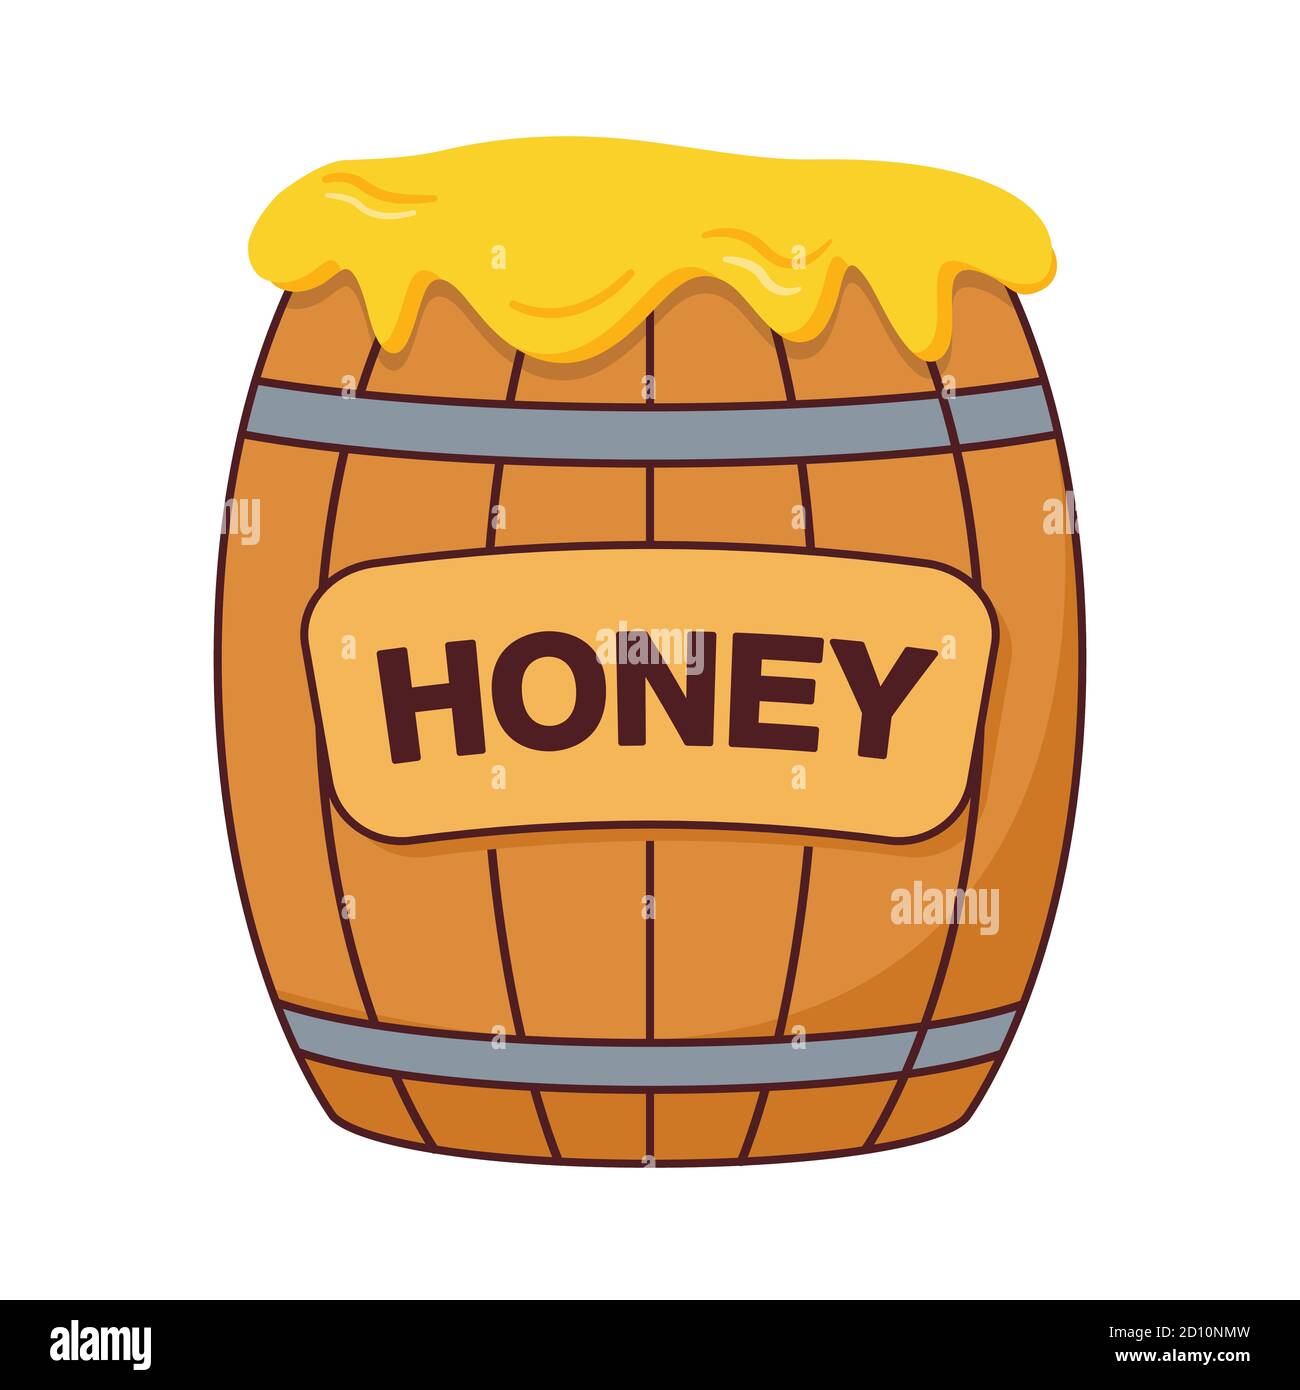 Wooden barrel honey. Icon of sweet delicacy. Cartoon illustration for children s books. Stock Vector